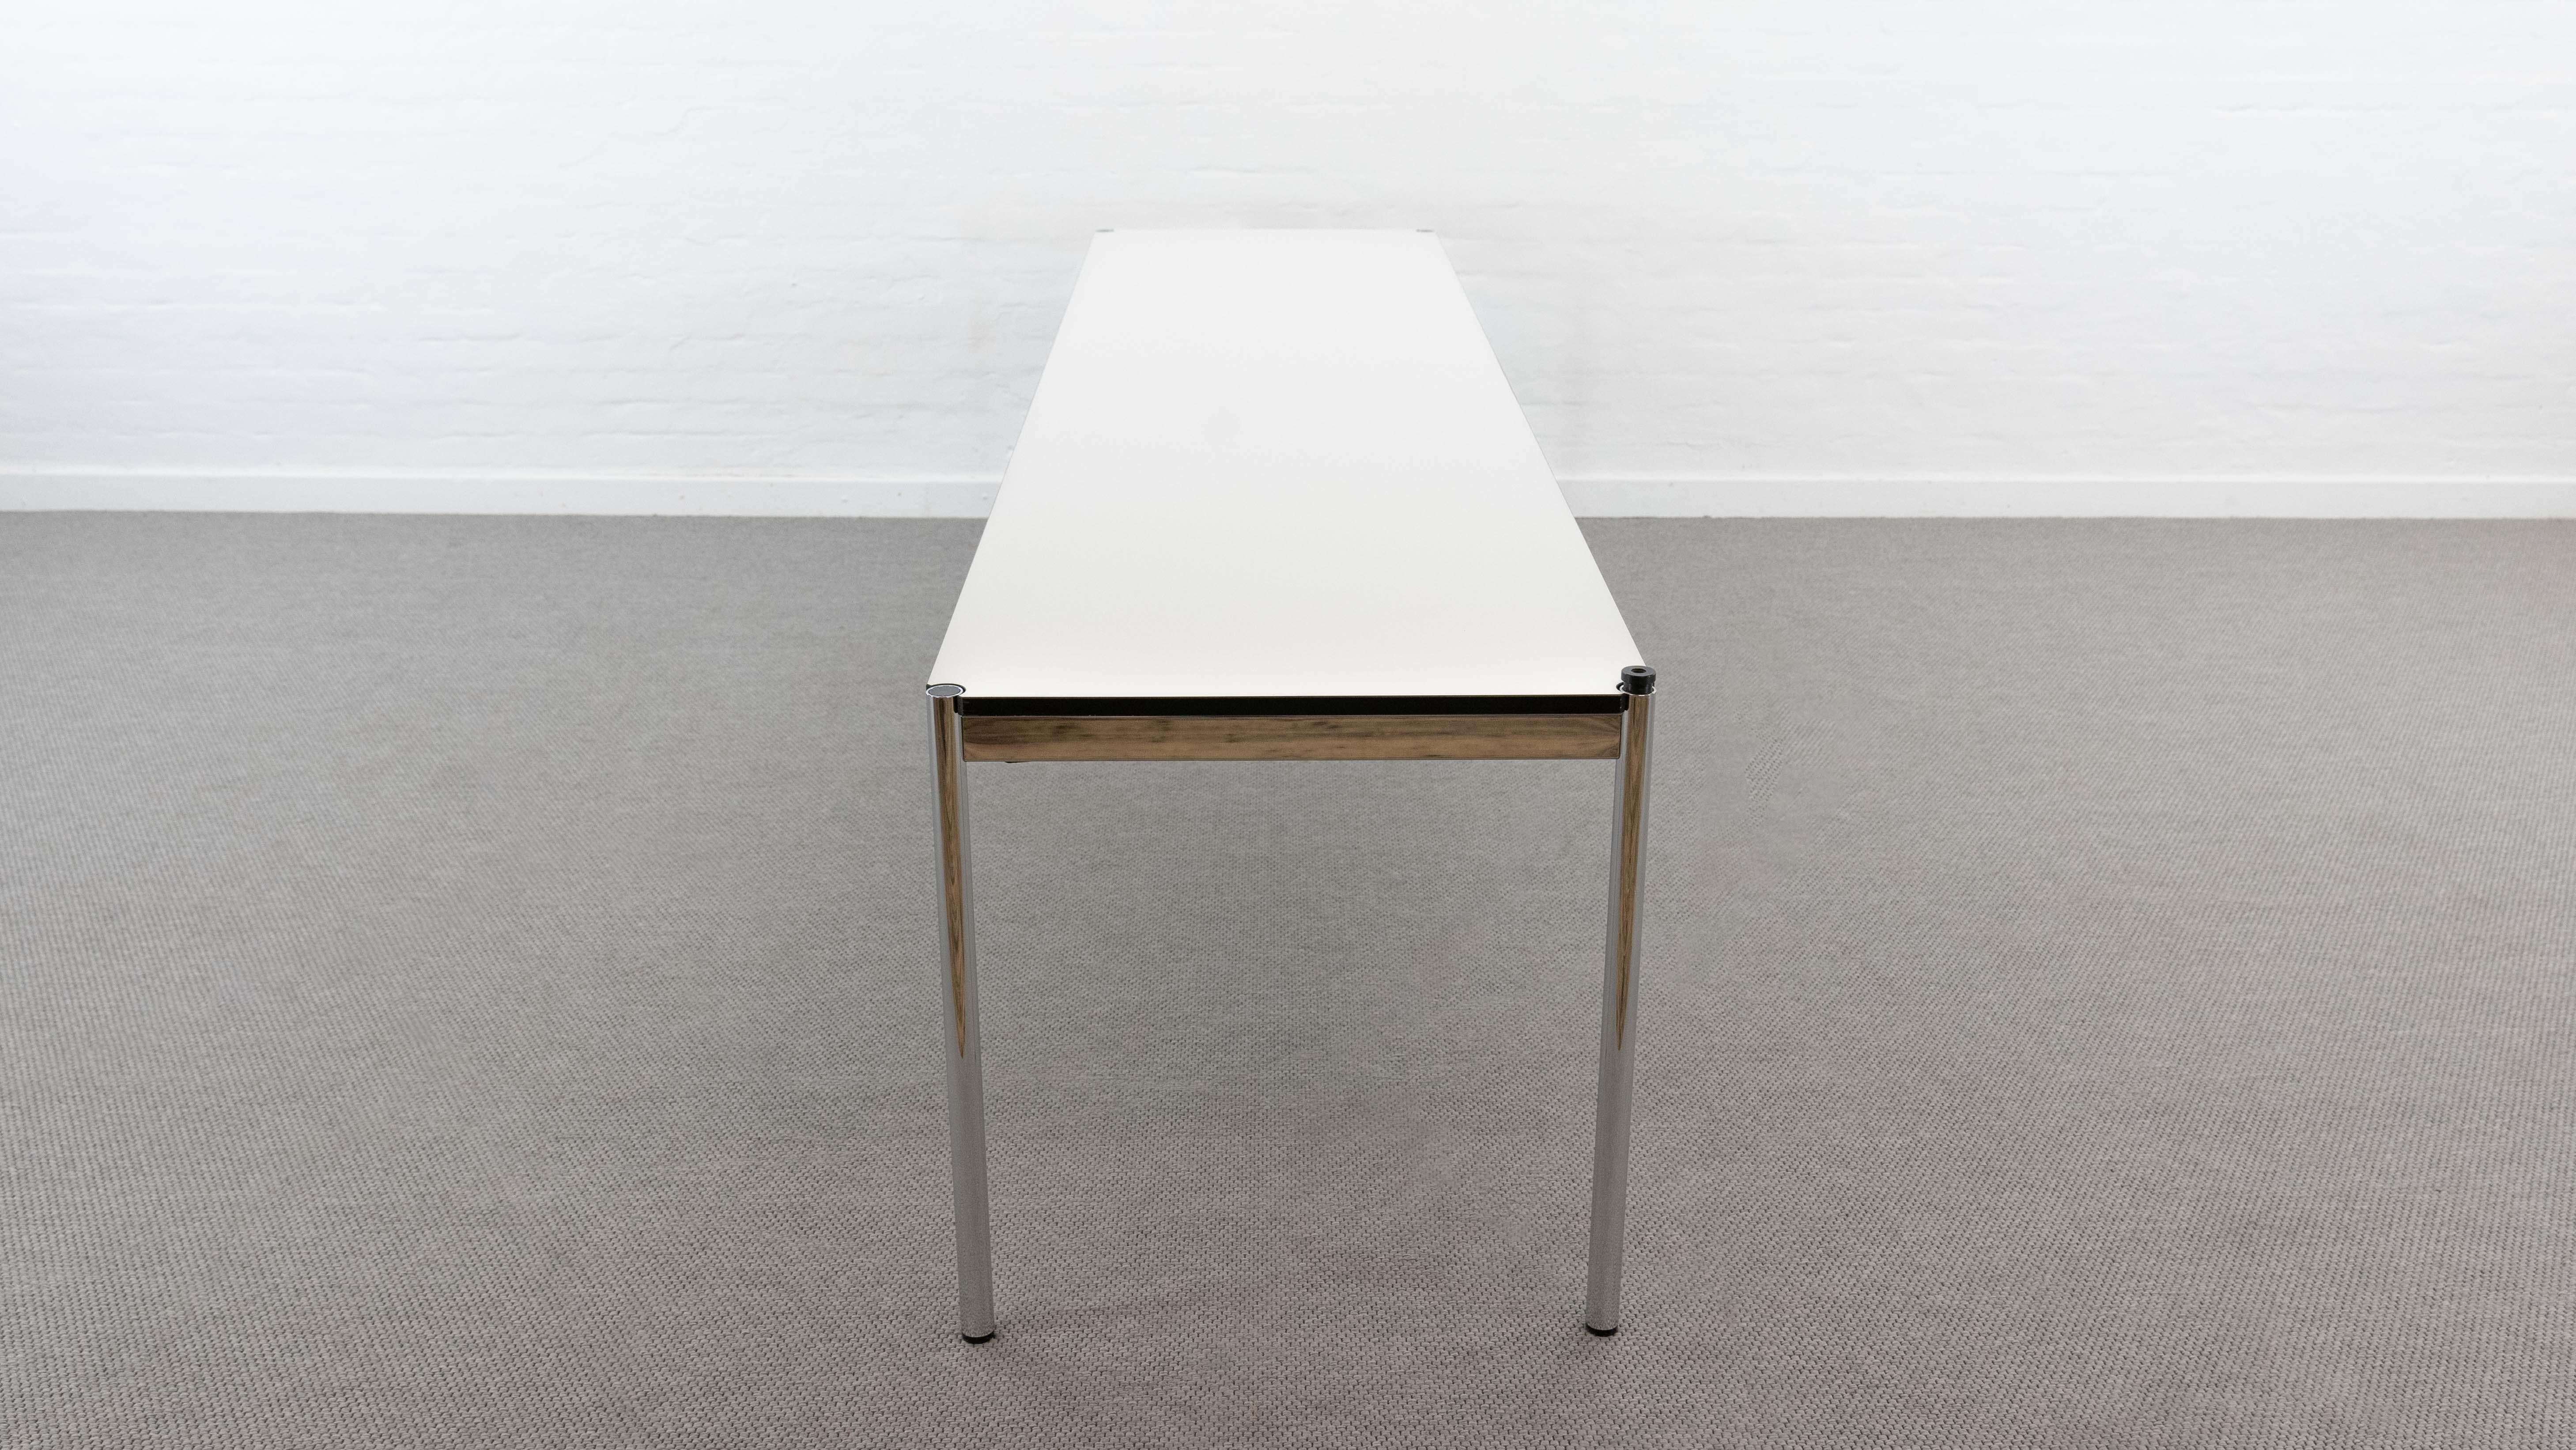 European USM Haller Table - Desk - Conference Table by Fritz Haller, 300cmx75cm, white